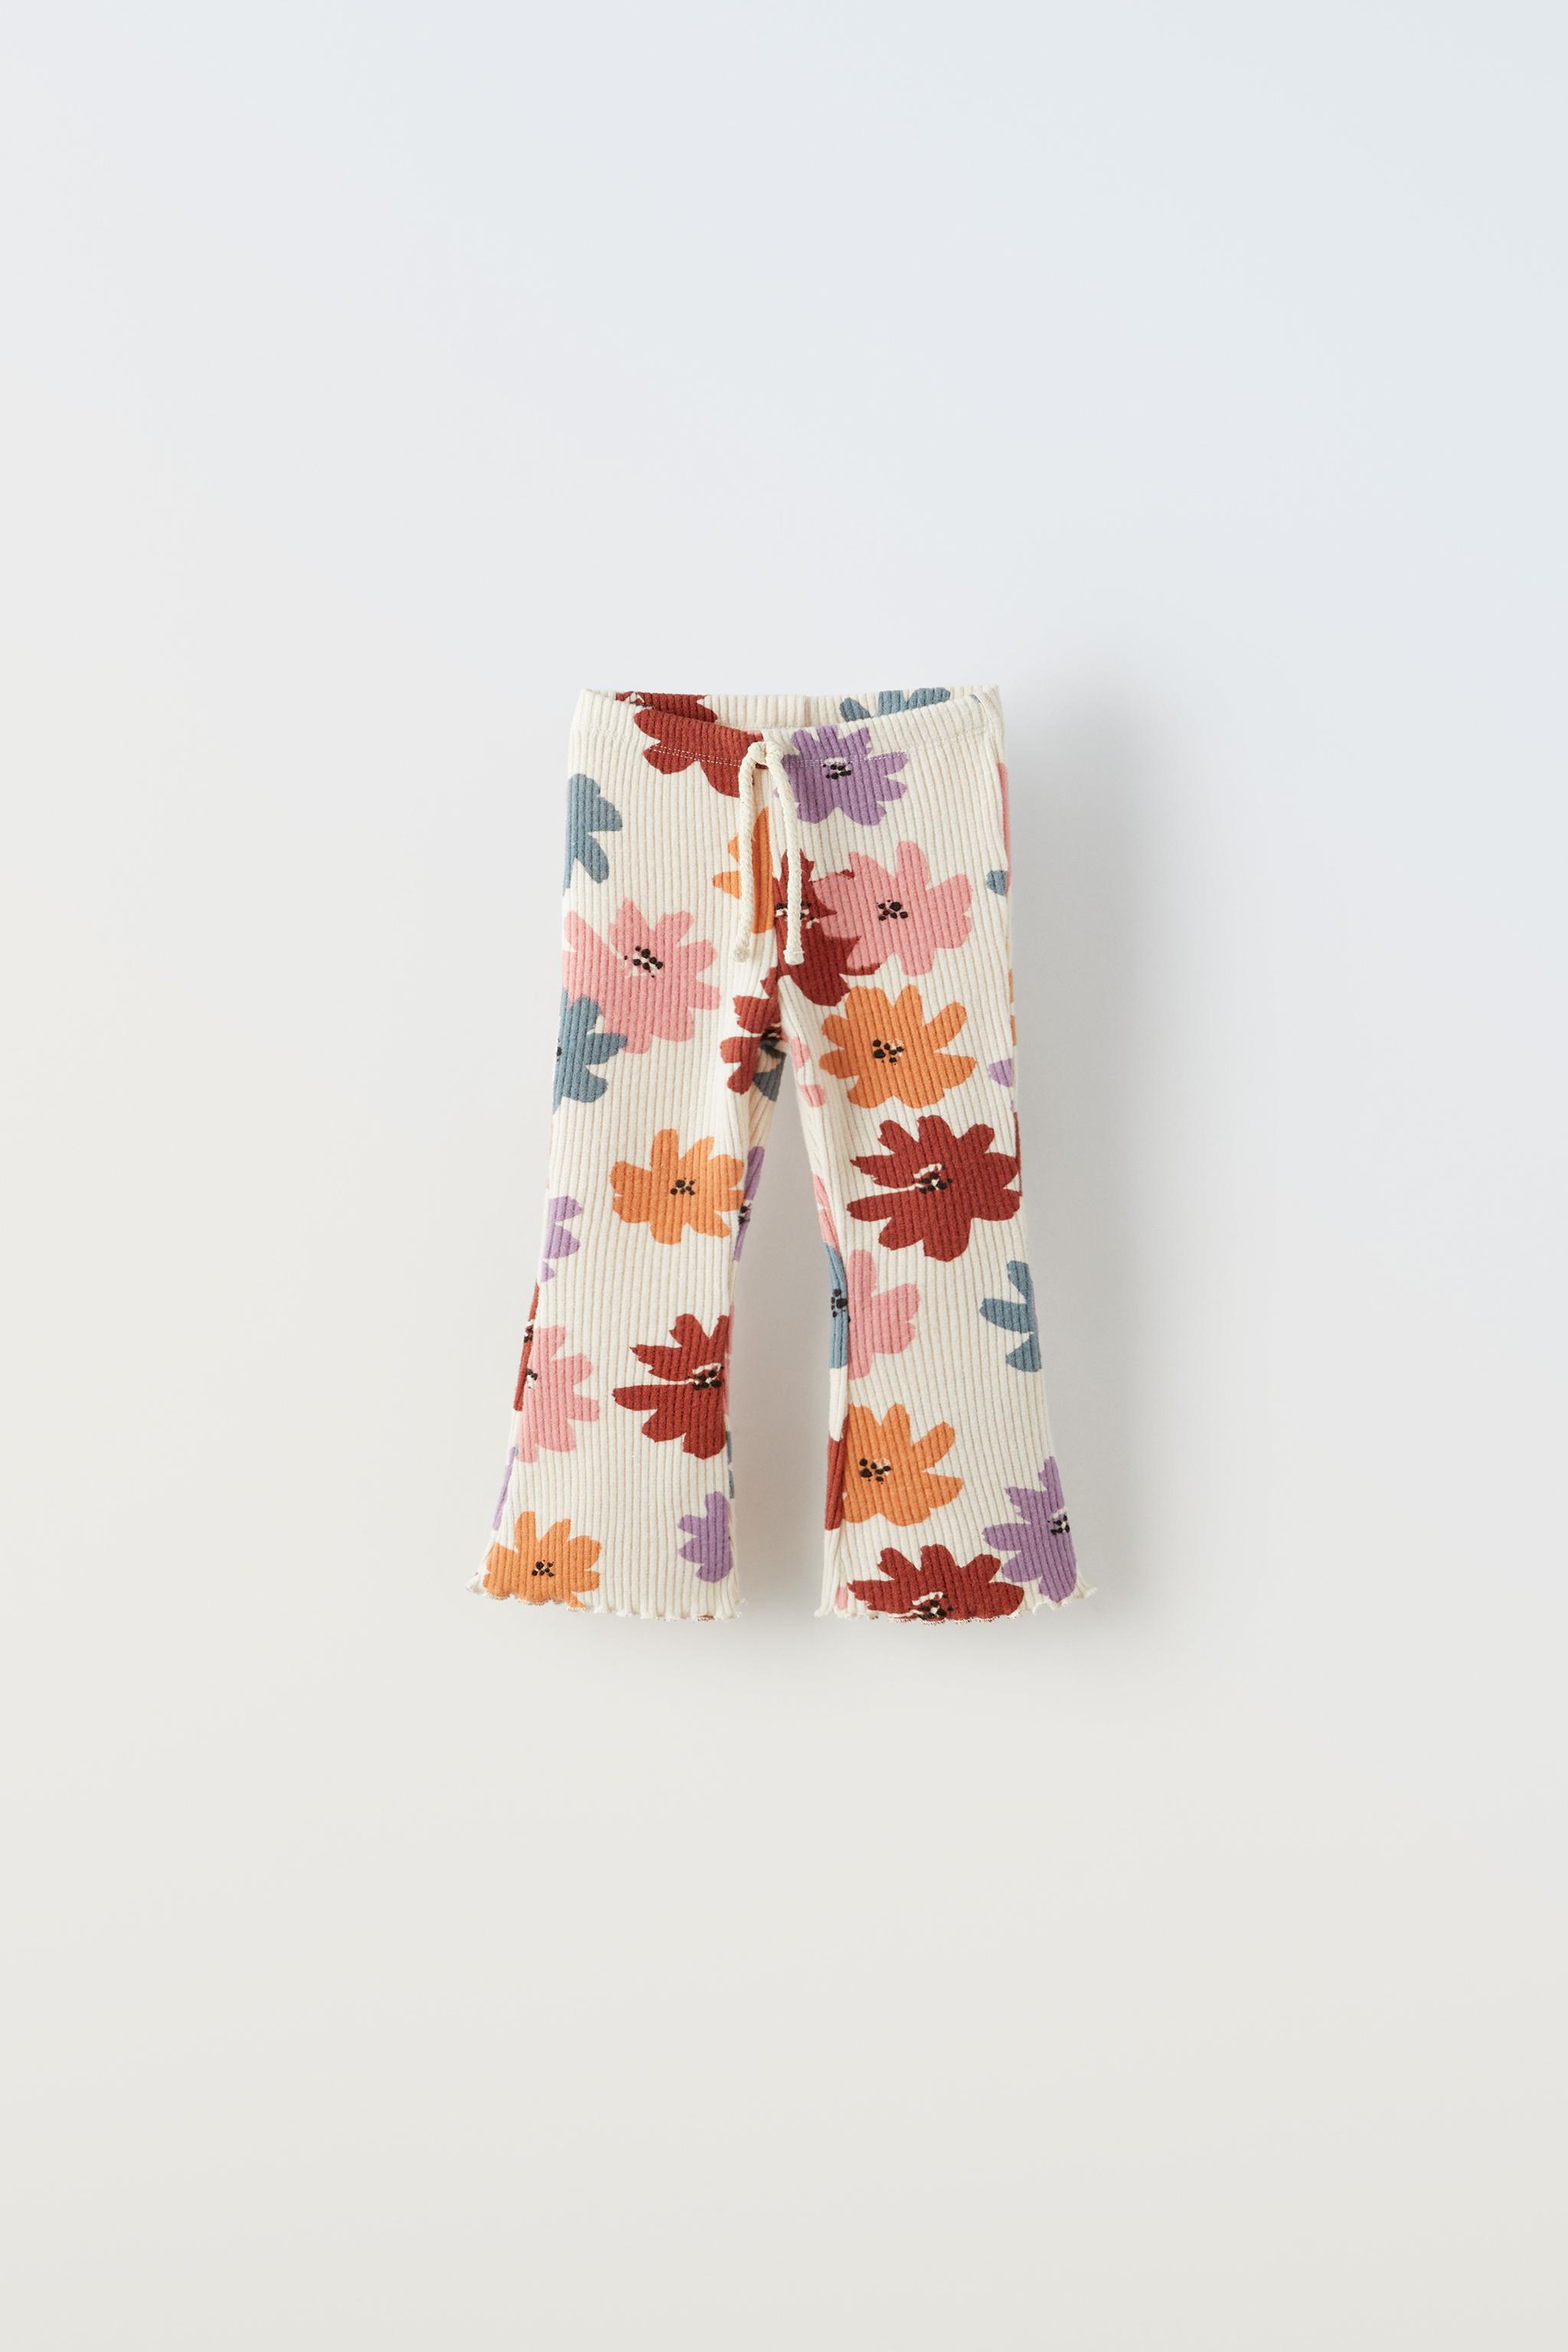 New Zara Printed High Waist Floral Pants with Satin Finish Medium